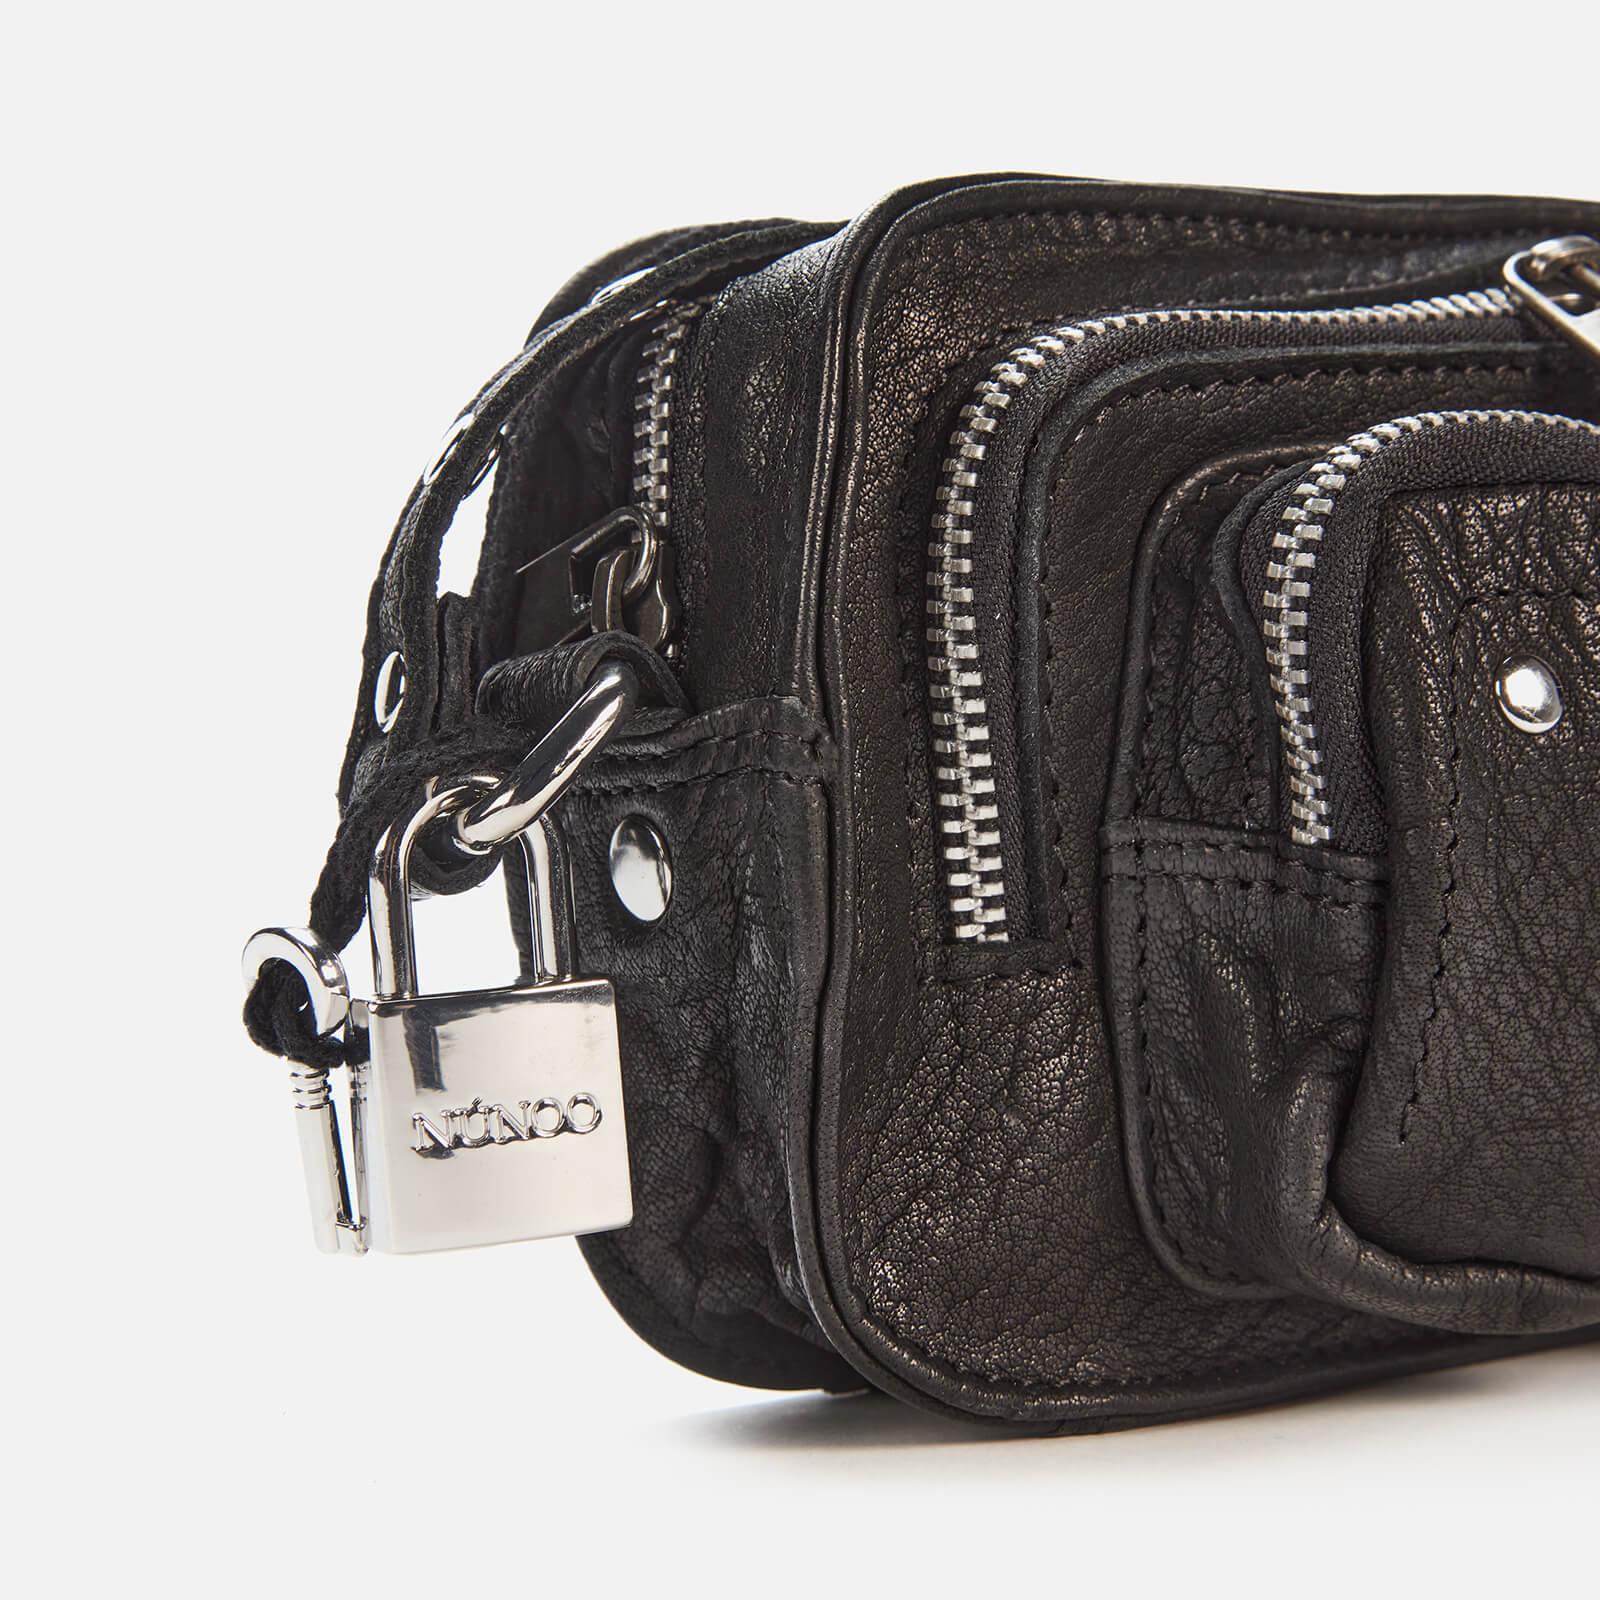 Nunoo Leather Helena Urban Bag in Black - Lyst